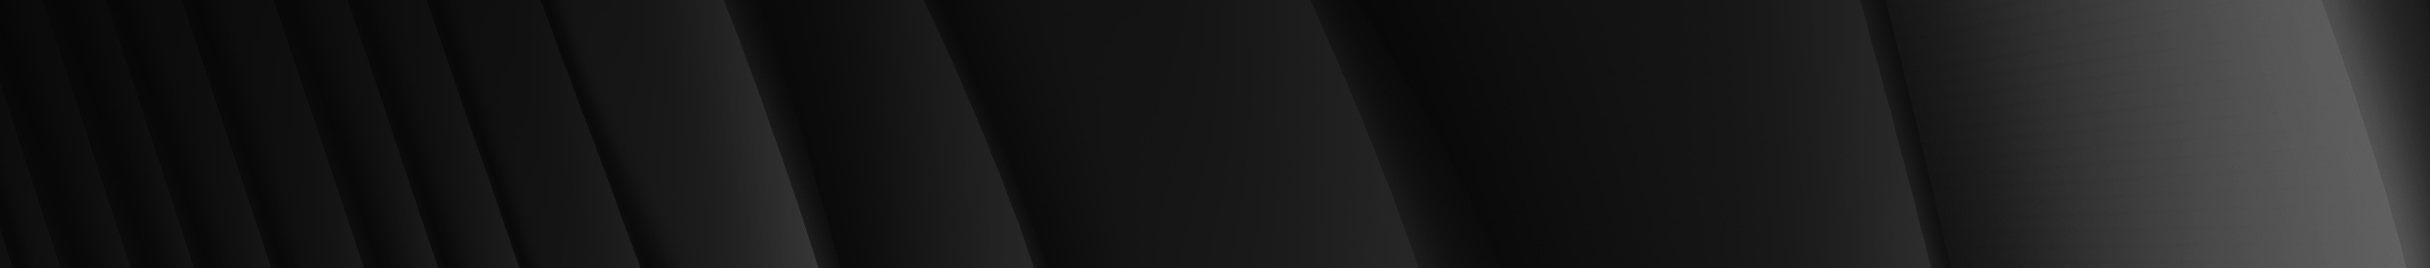 Denis Cre's profile banner